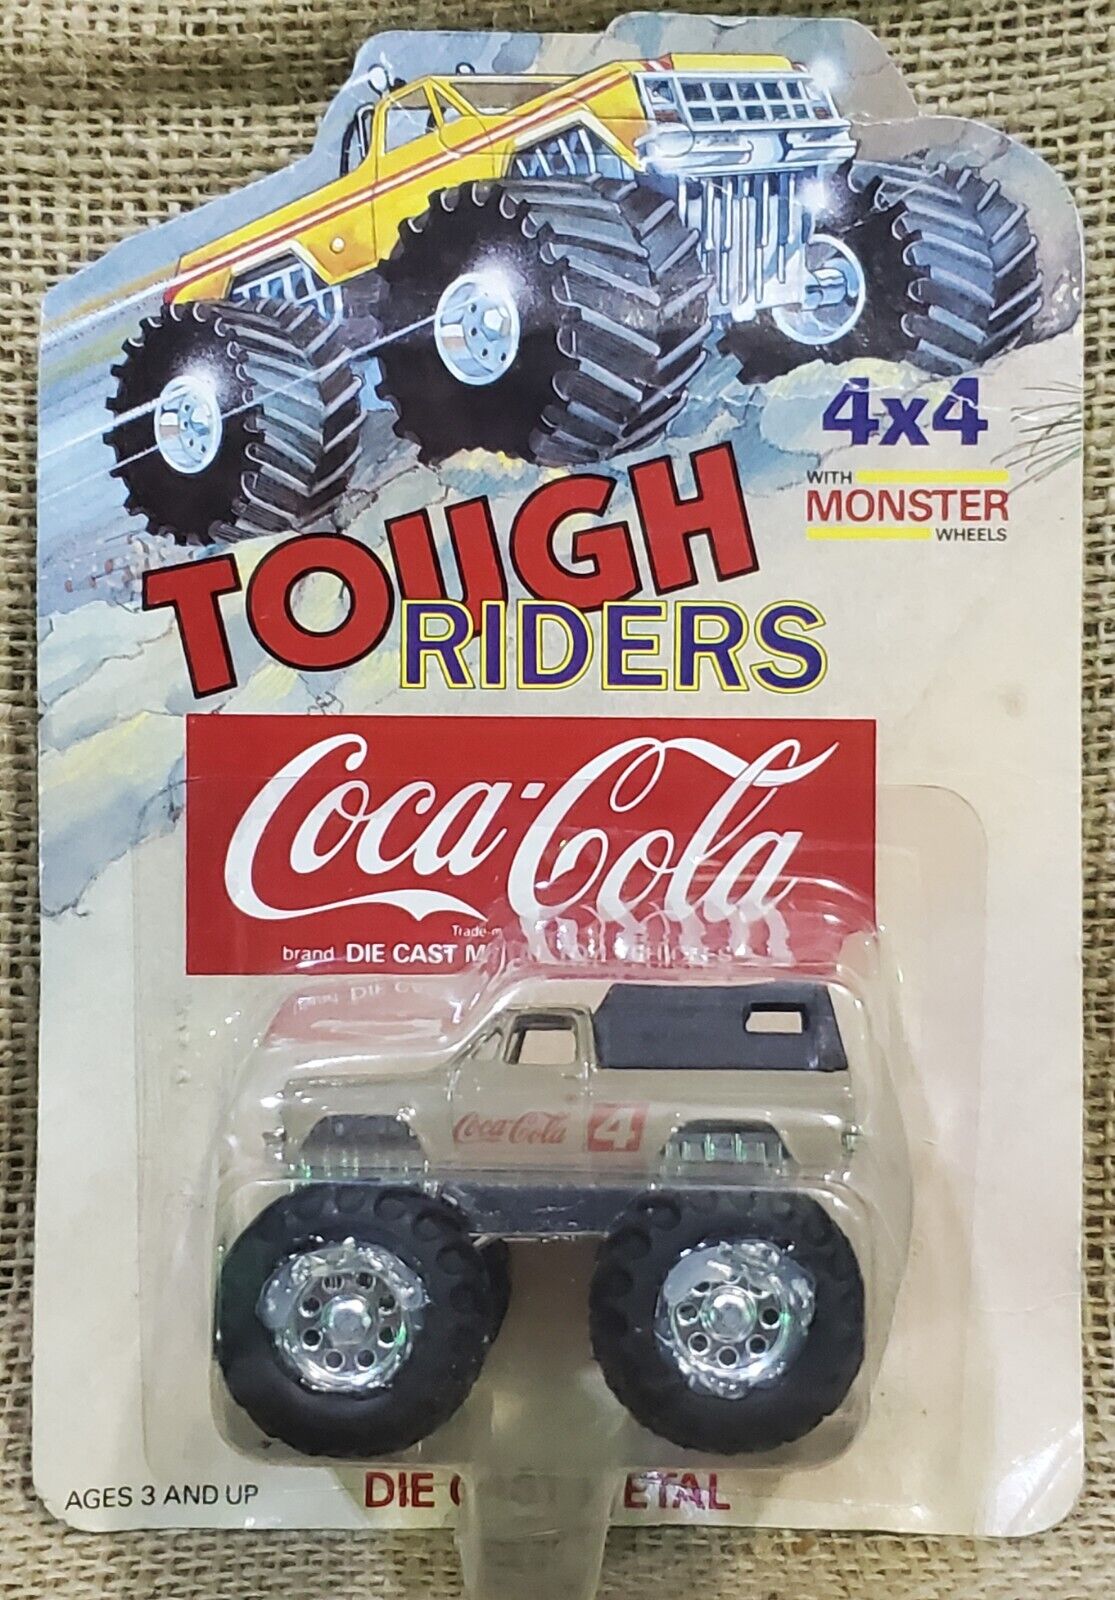 Vintage Coca cola Die Cast “Tough Riders” 4x4 Monster Truck Vehicle #4 Toy NIP